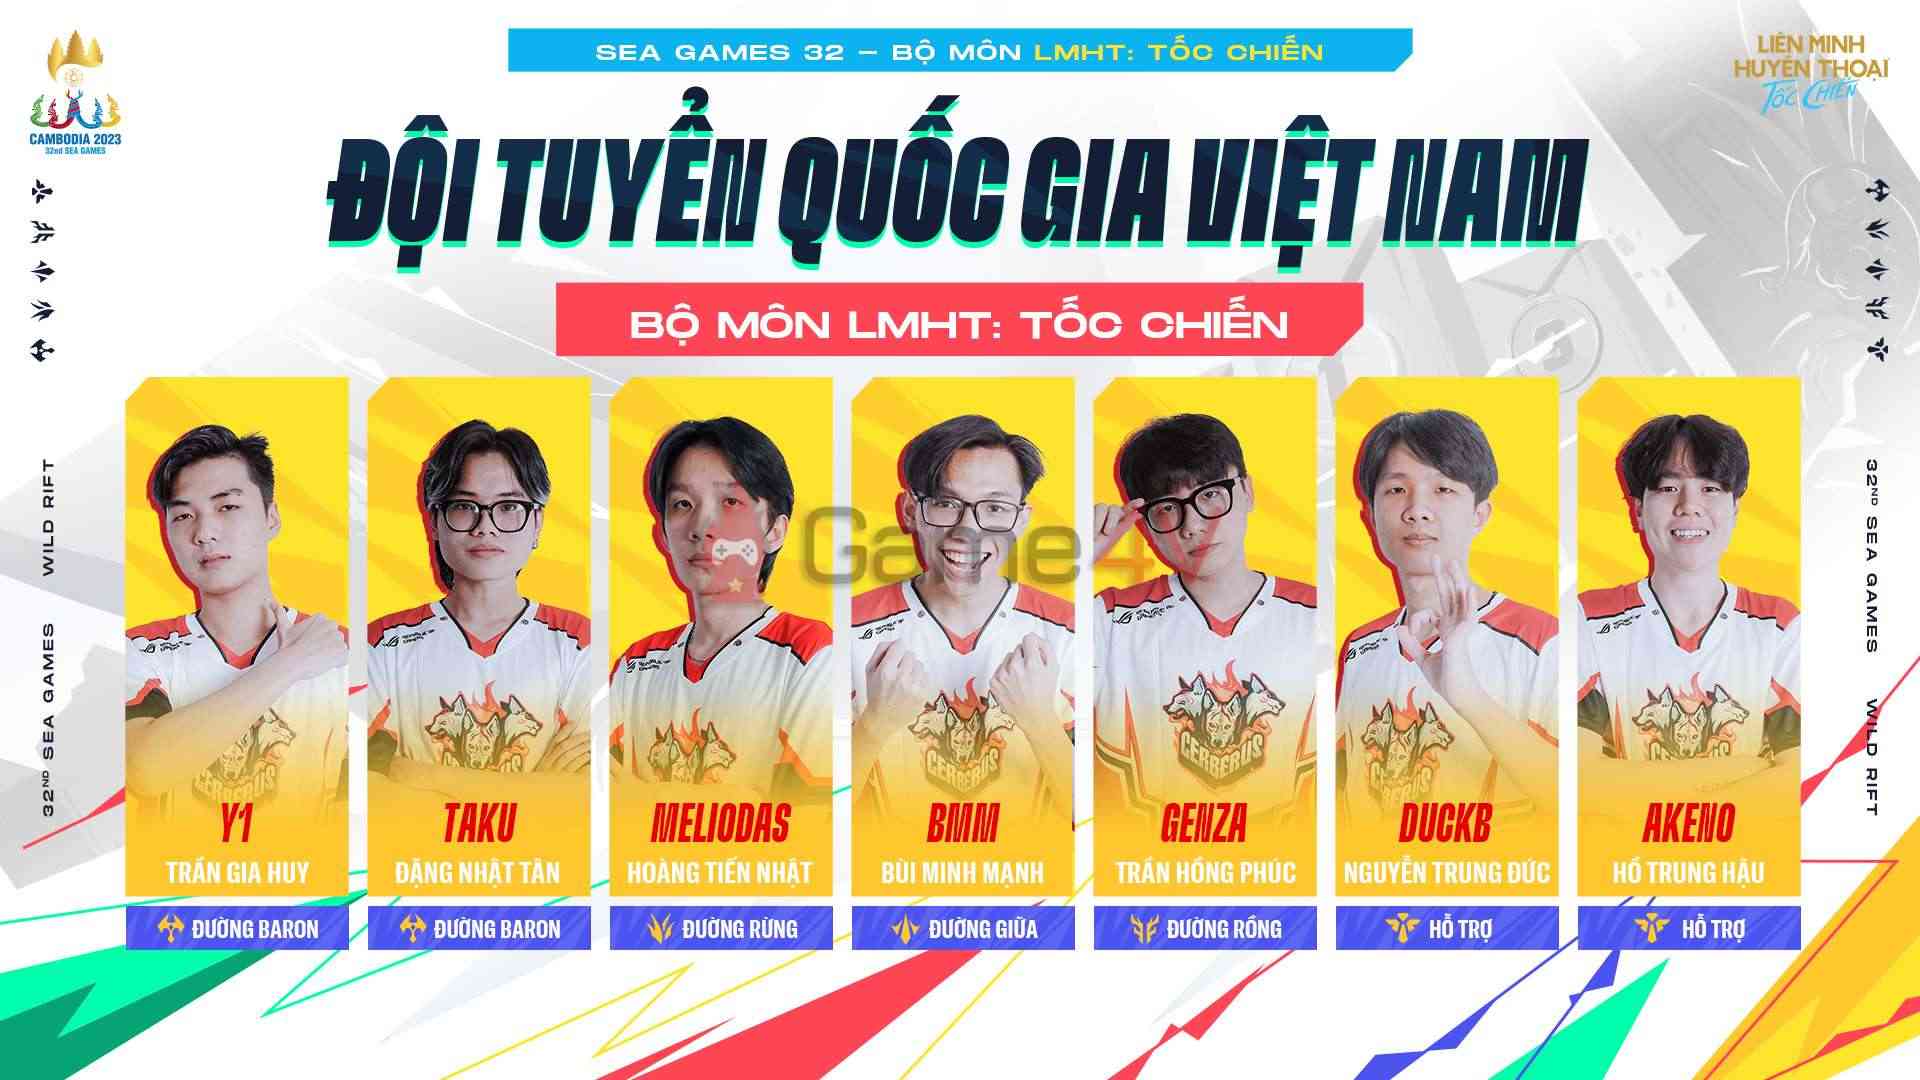 List of the entire Vietnam national team Esports